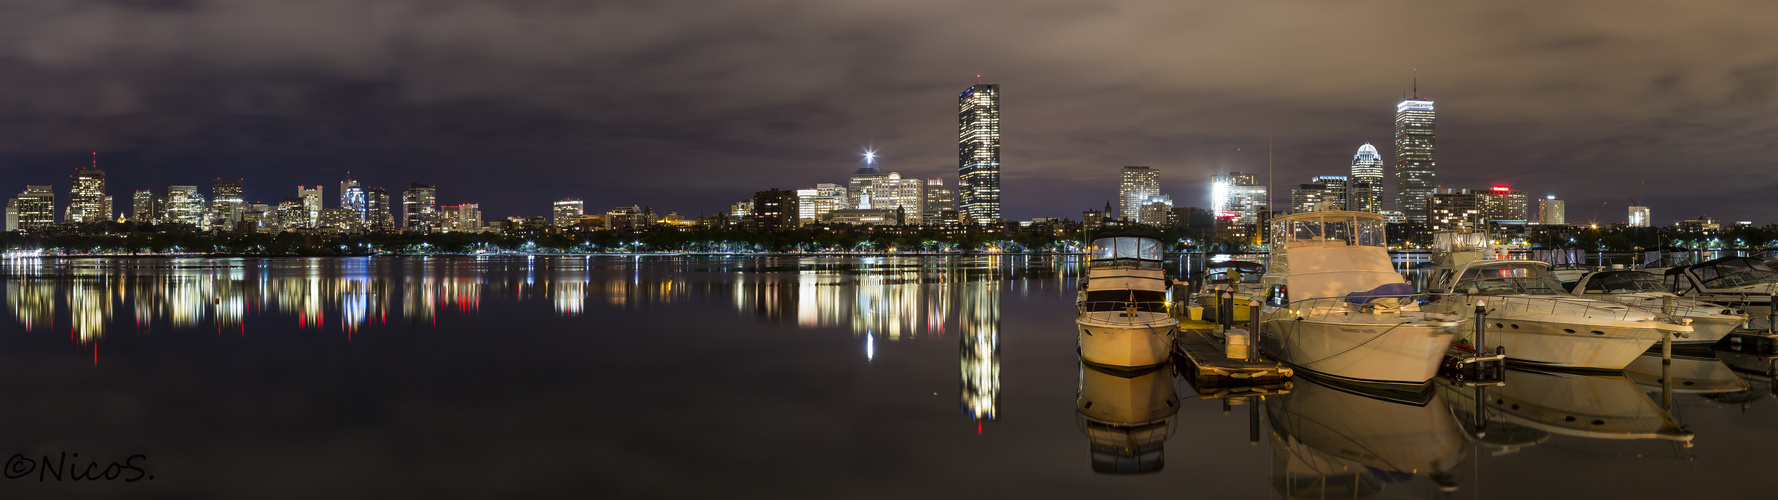 Boston Charles River view